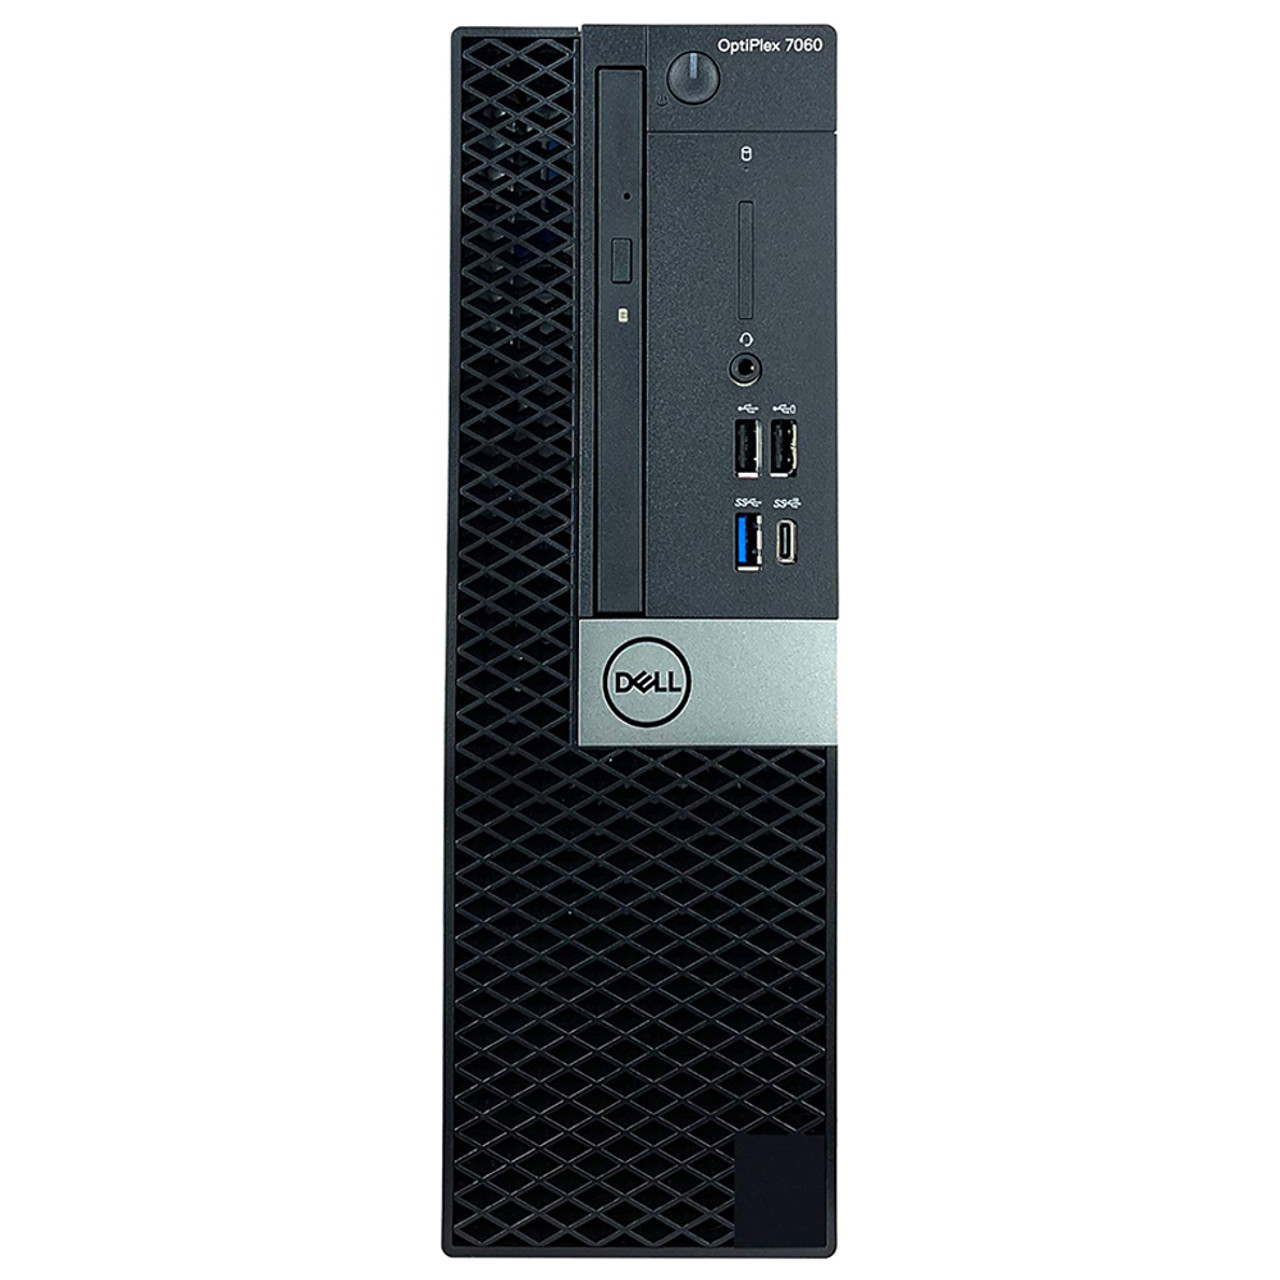 Pack PC bureau reconditionné - Dell Optiplex 7060 SFF + 22 Lenovo